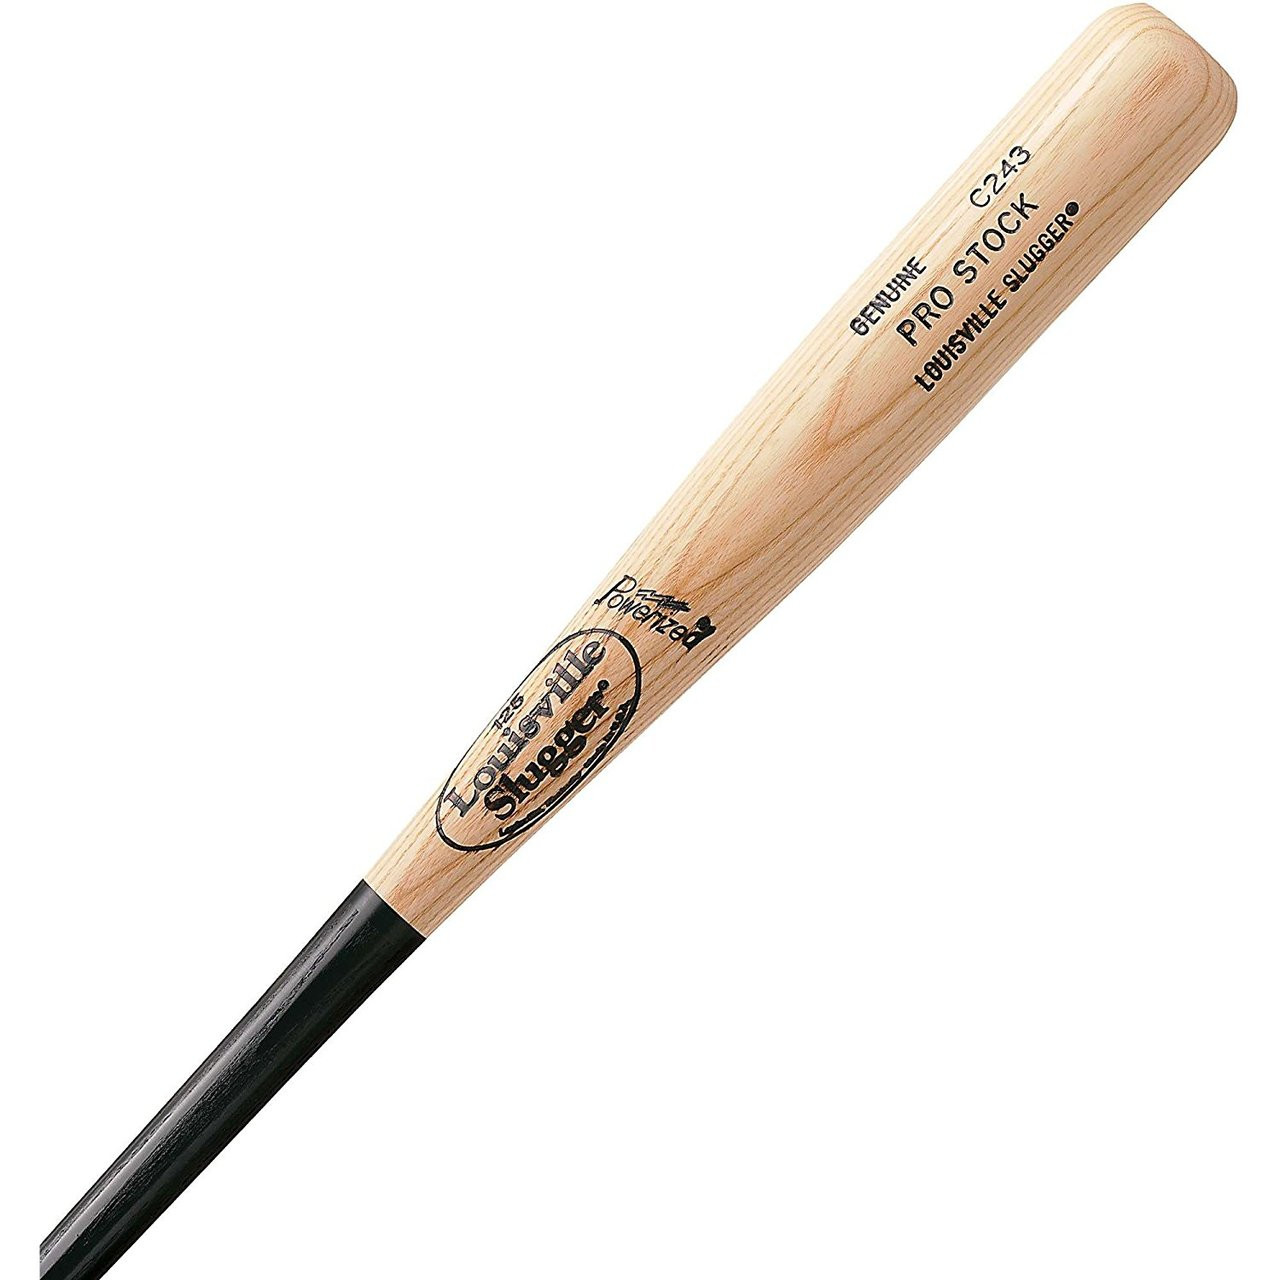 Louisville Slugger C243 Pro Stock Ash Wood Baseball Bat Black Natural 32 inch - Ballgloves